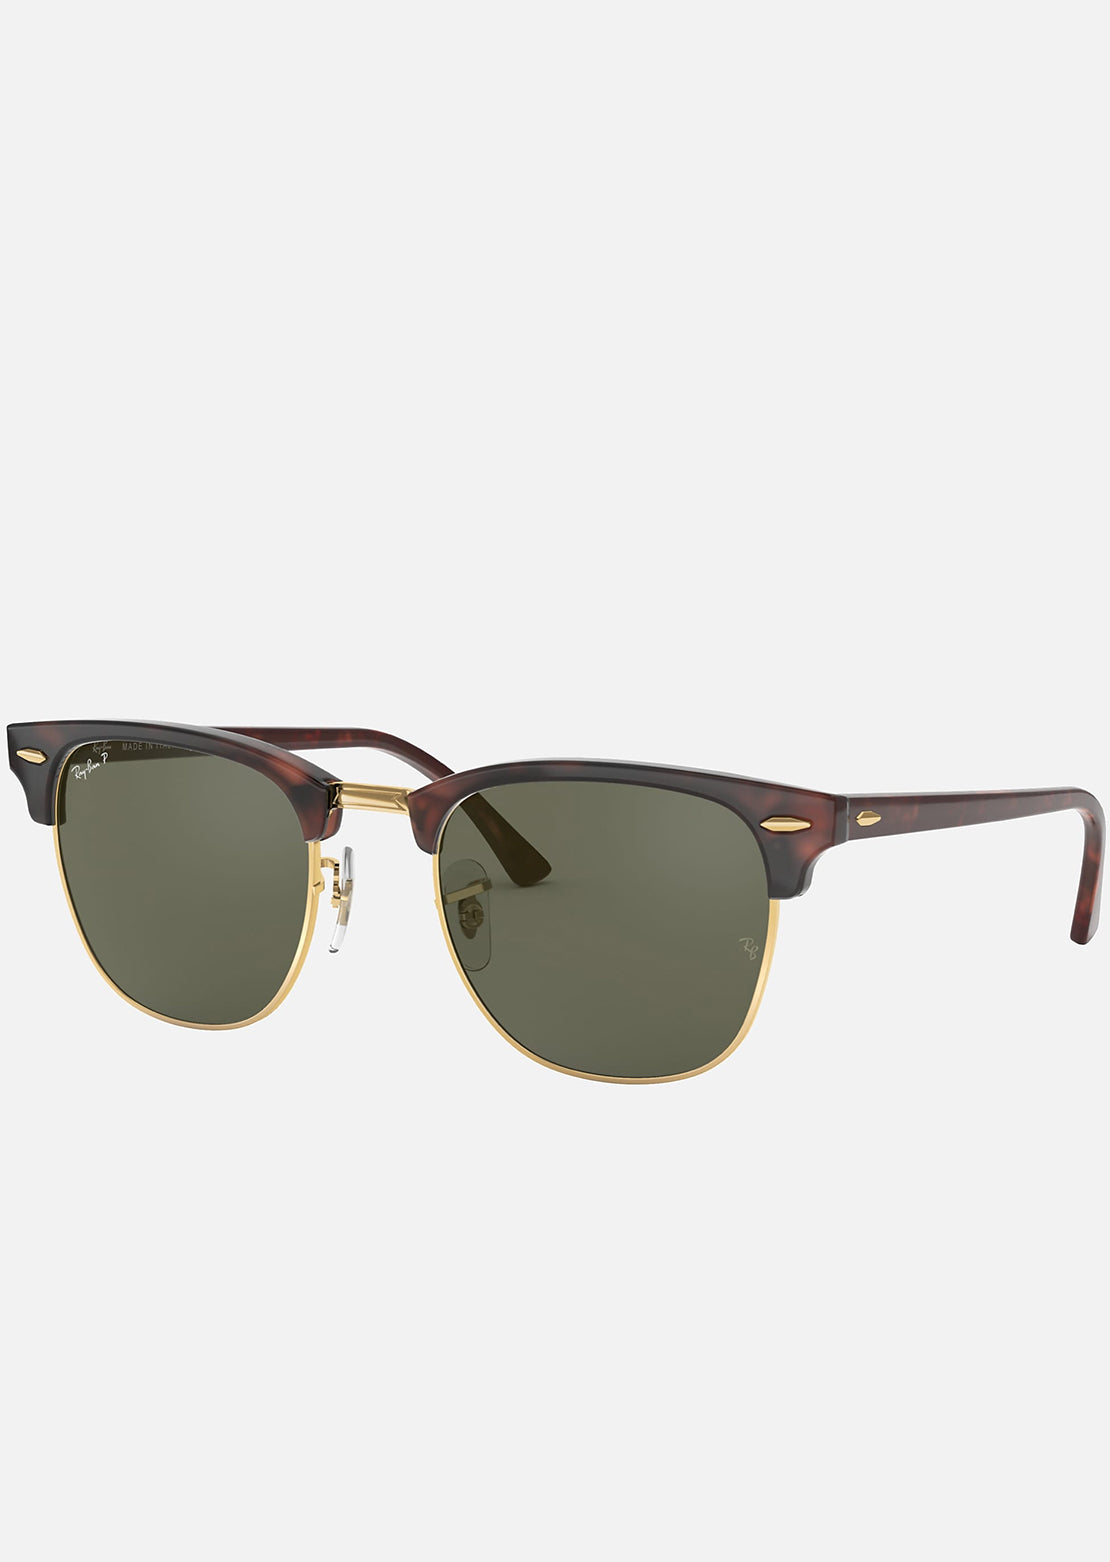 classic clubmaster sunglasses